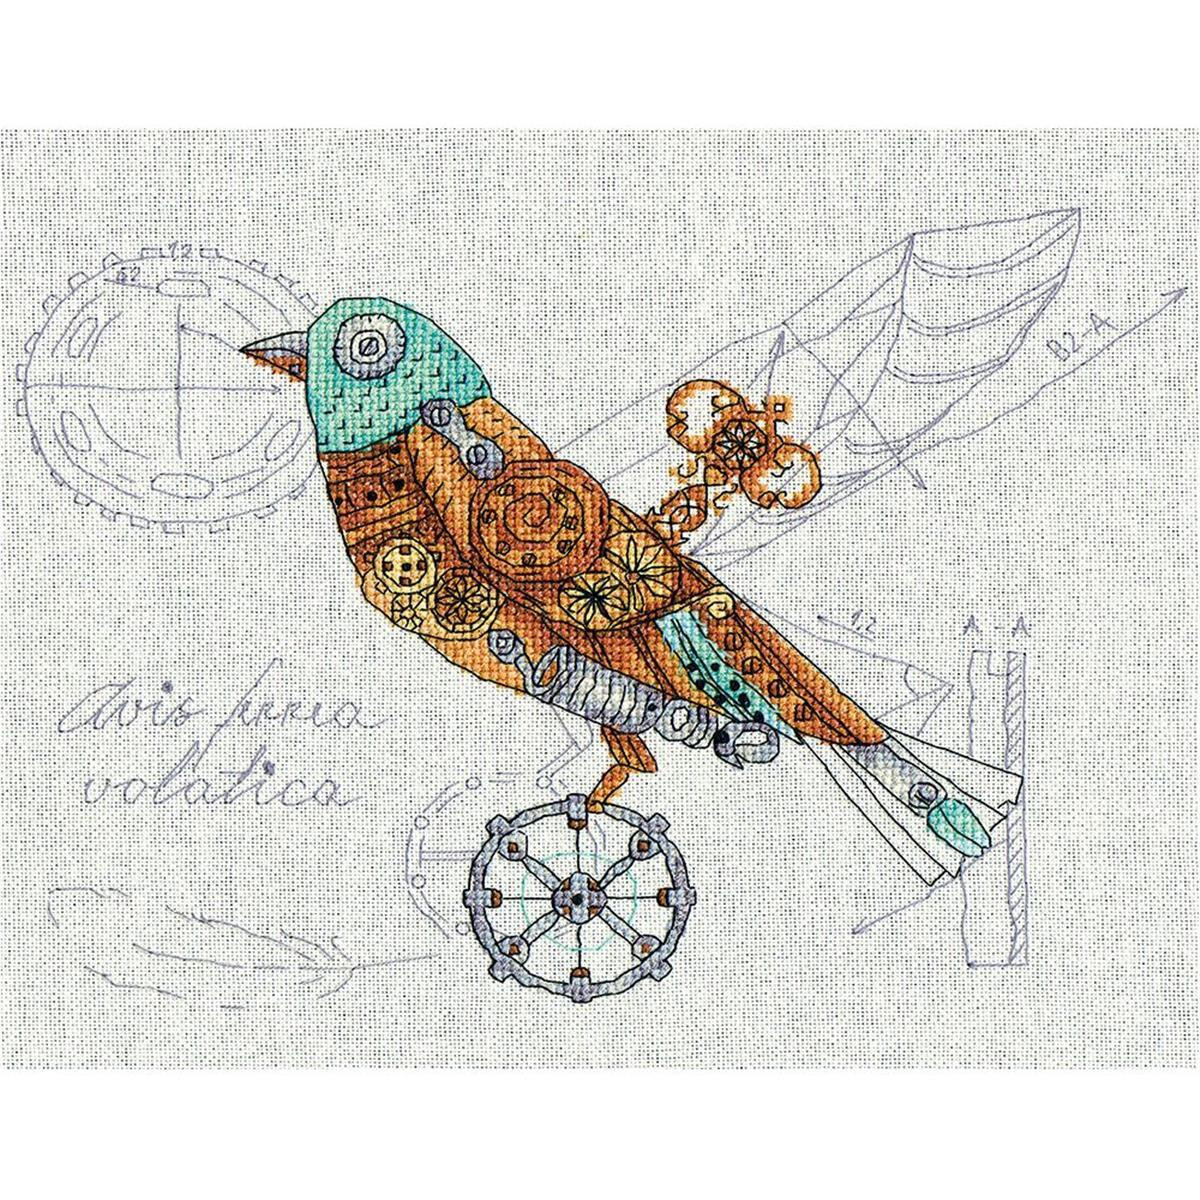 Panna counted cross stitch kit "Clockwork Bird"...